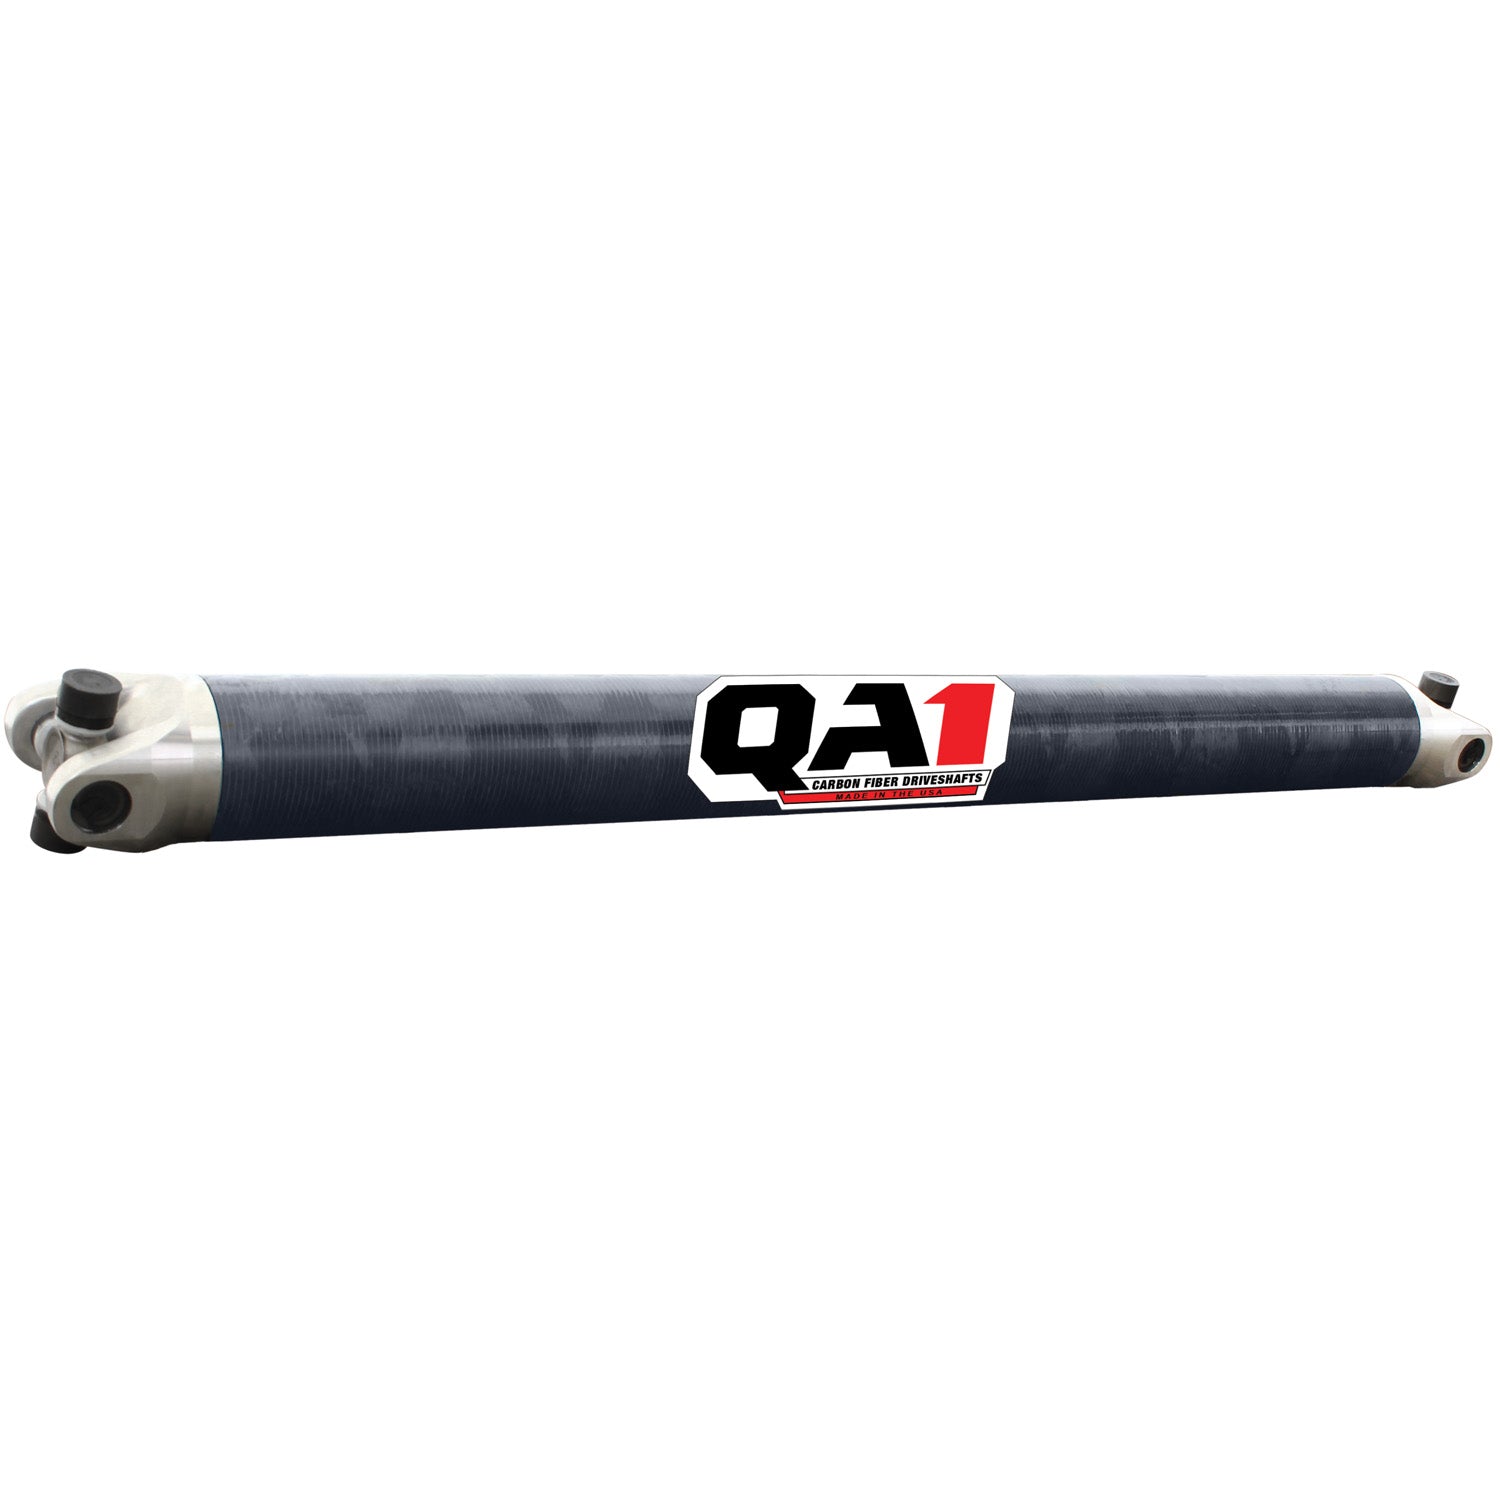 QA1 JJ-11233 Driveshaft, Cf, Ct-Dirt LM, 38.00 XM 3.2, 1310 U-Joint, 2600Lb.